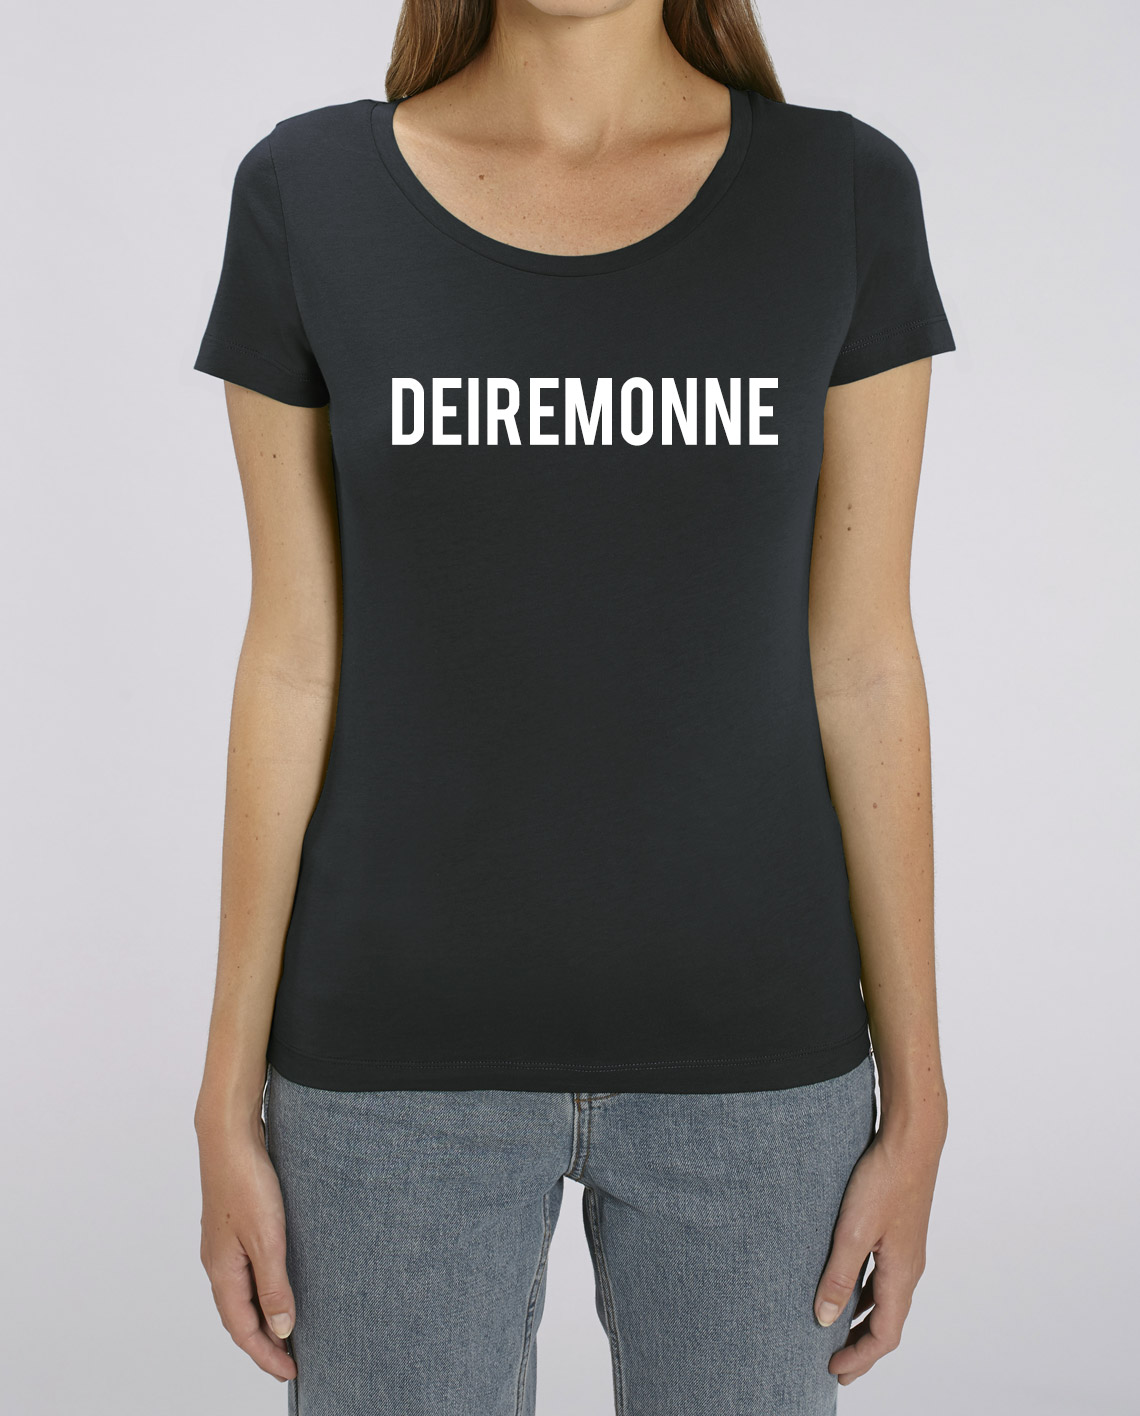 T-Shirt Deiremonne (V) bij Intdialect.be Intdialect